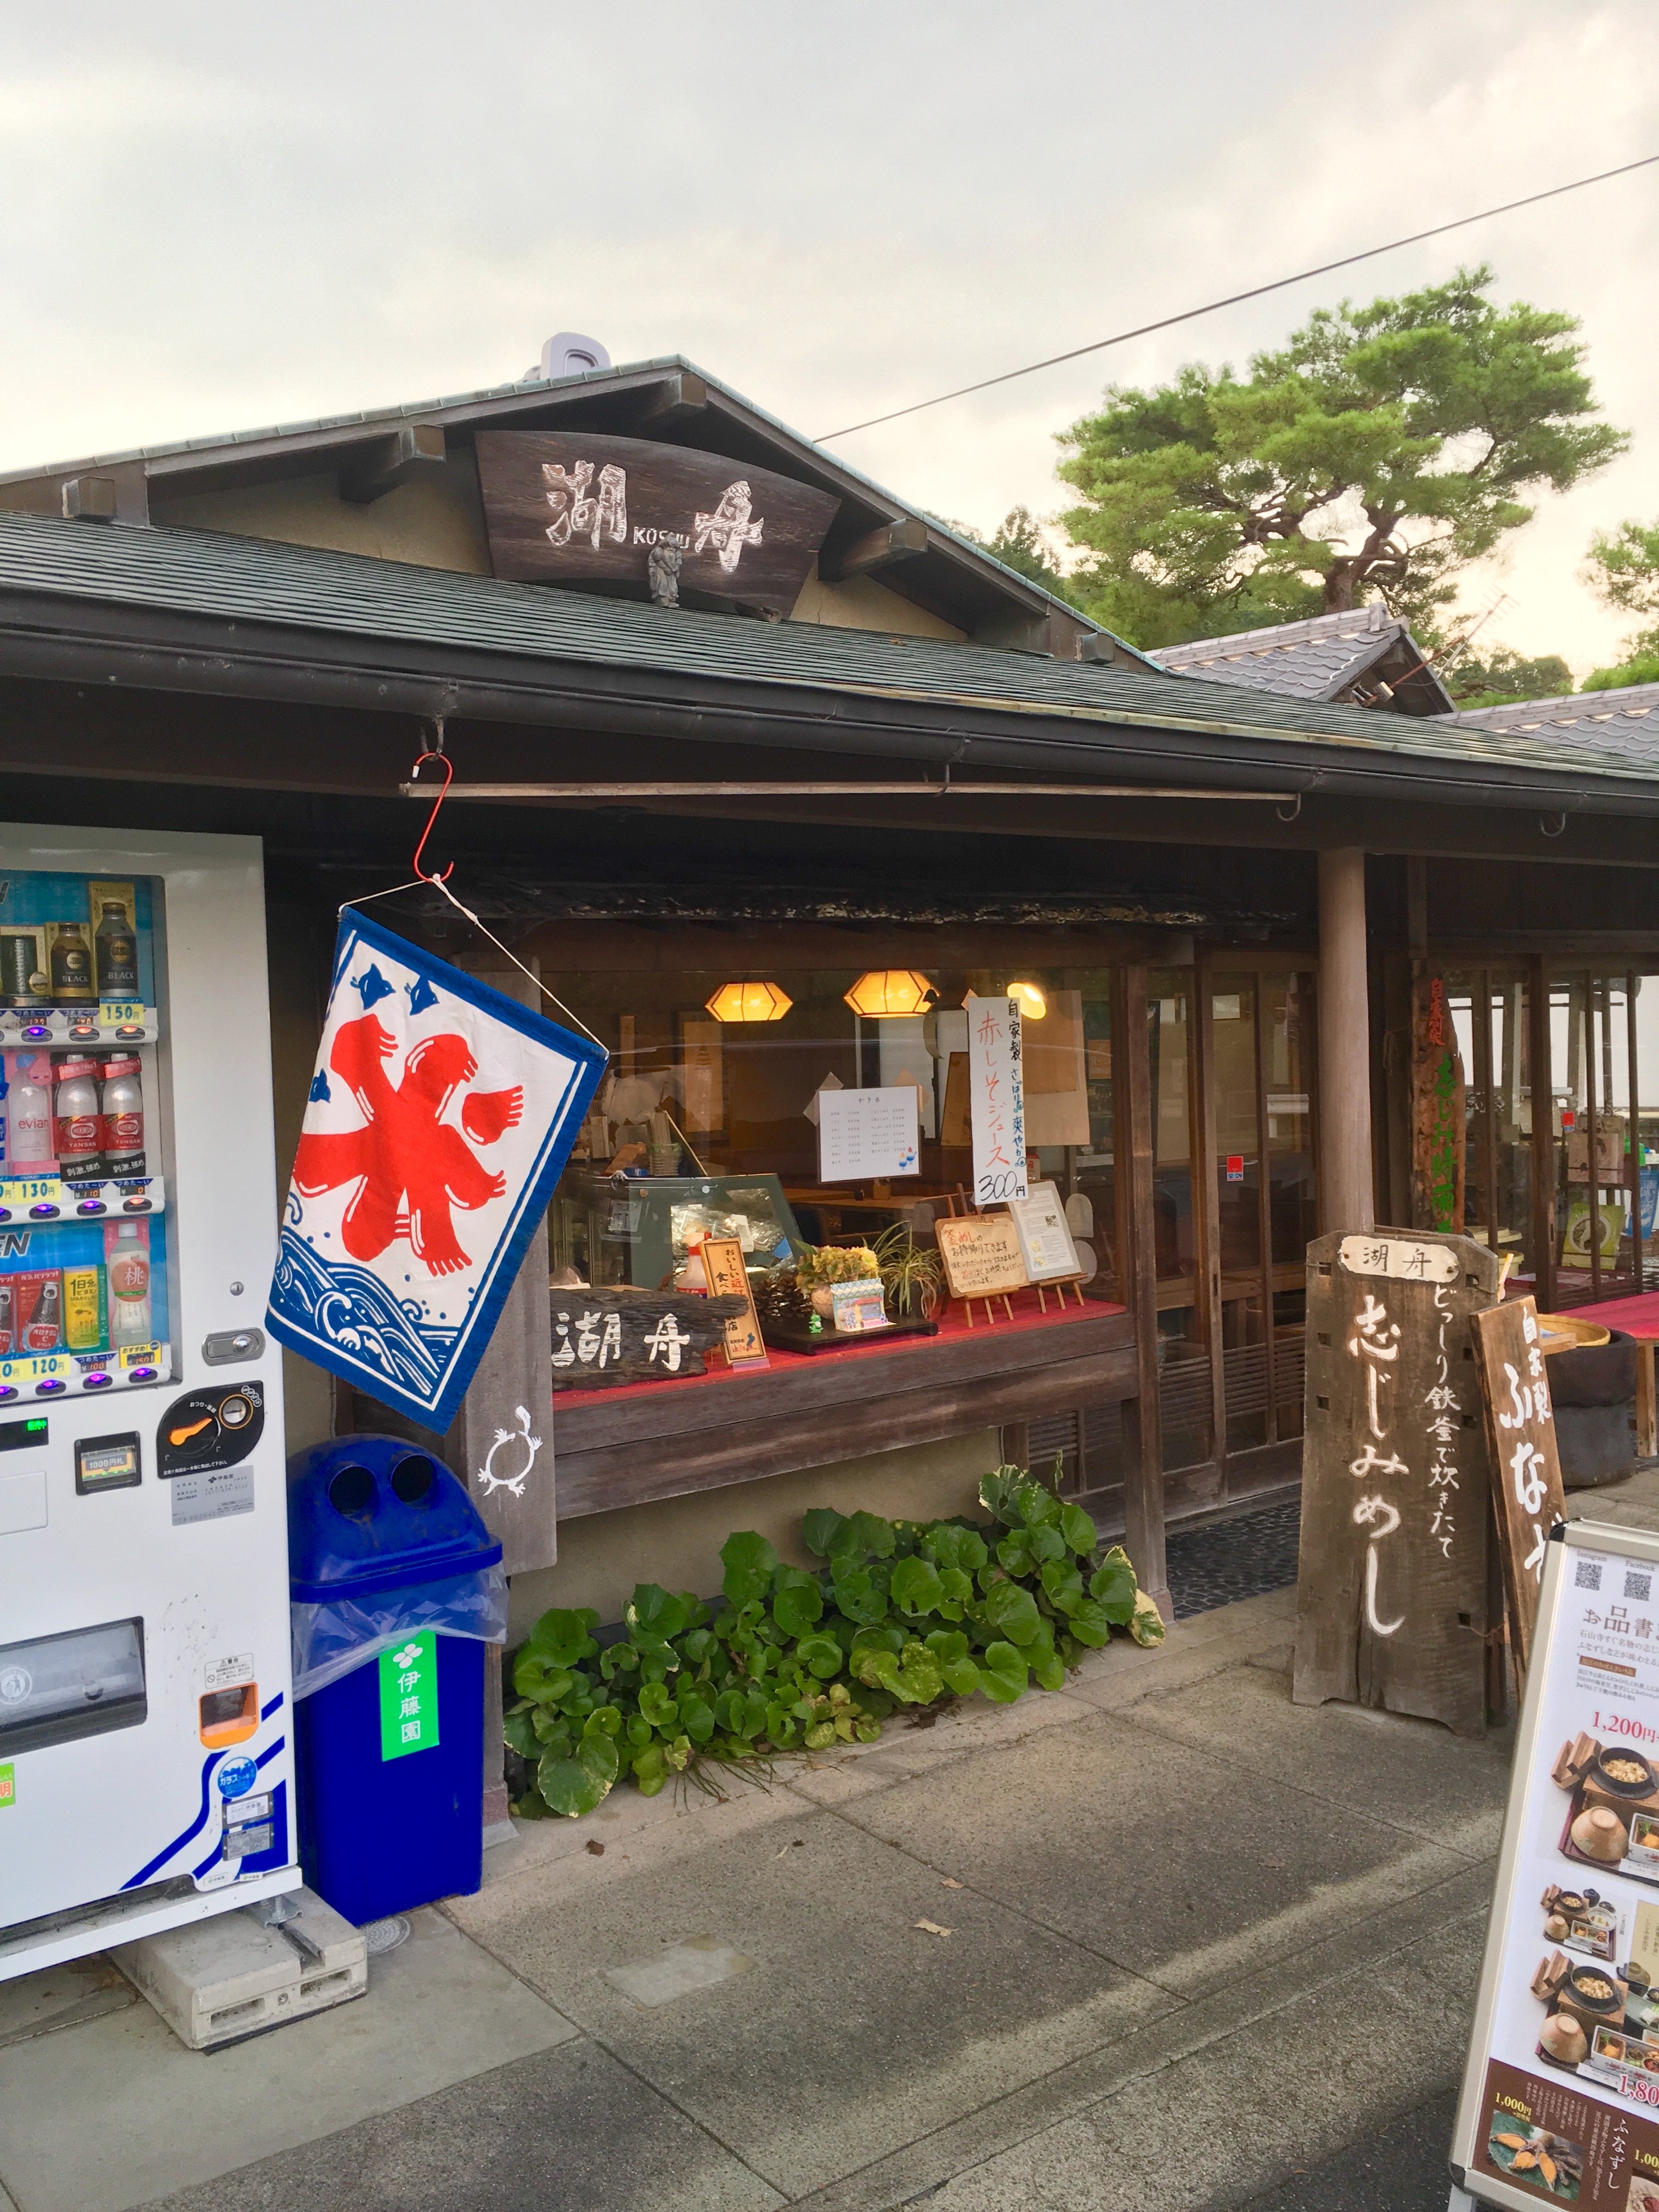 Koshu restaurant located near Ishiyama-dera Temple